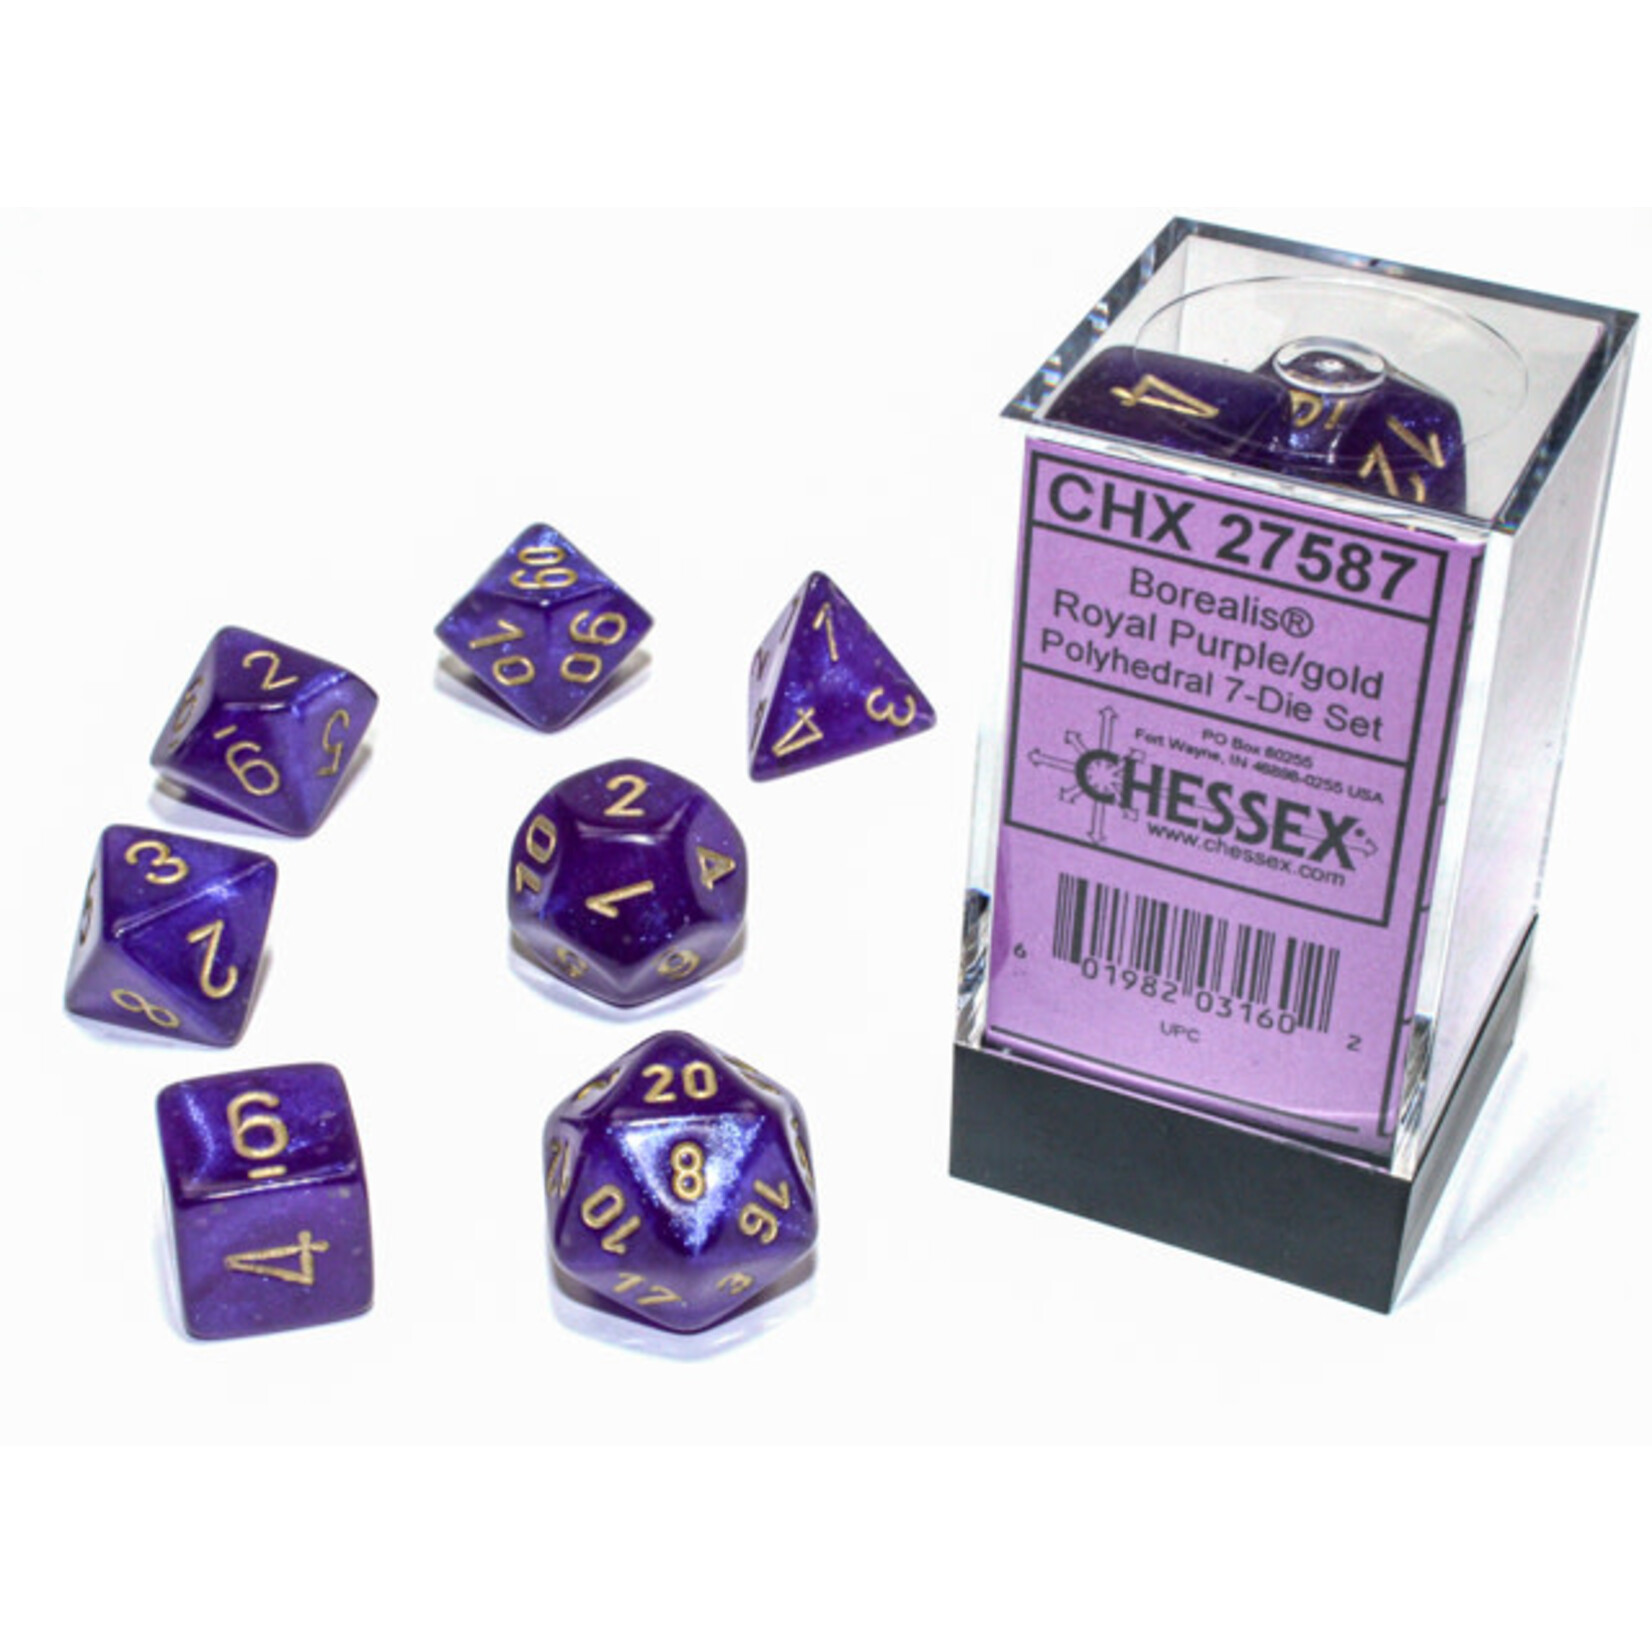 Chessex Dice RPG 27587 7pc Borealis Royal Purple/Gold Luminary